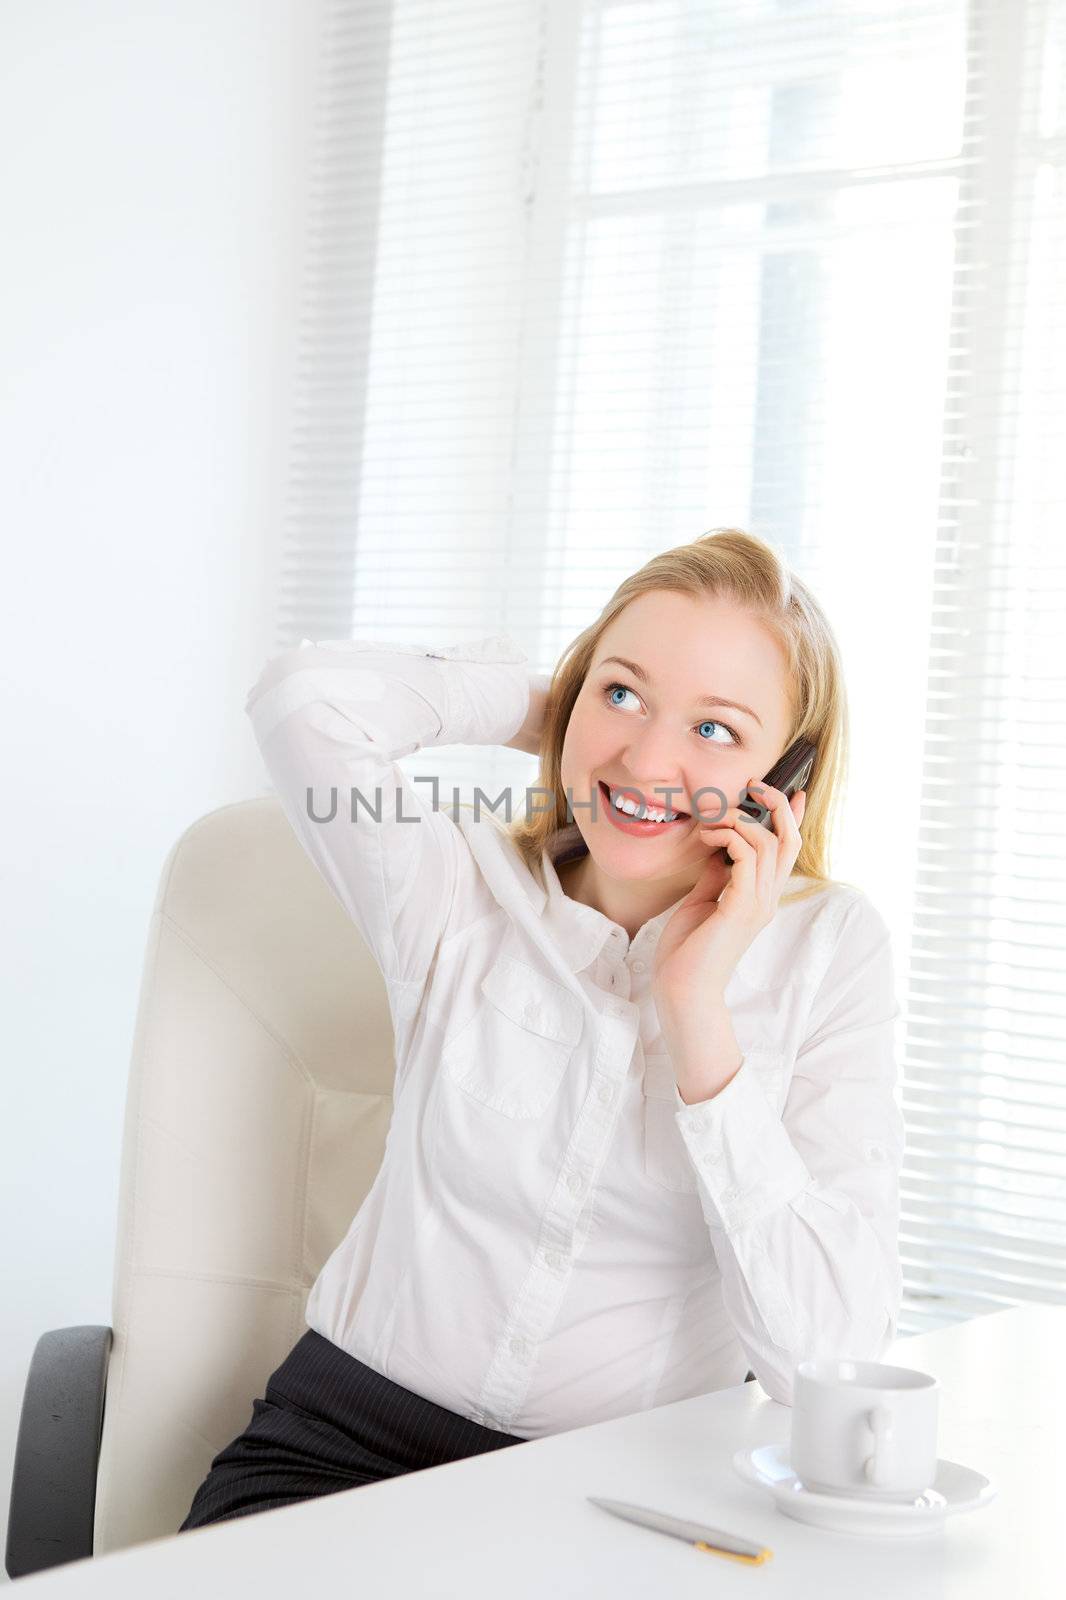 Office Girl Talking on Phone by petr_malyshev